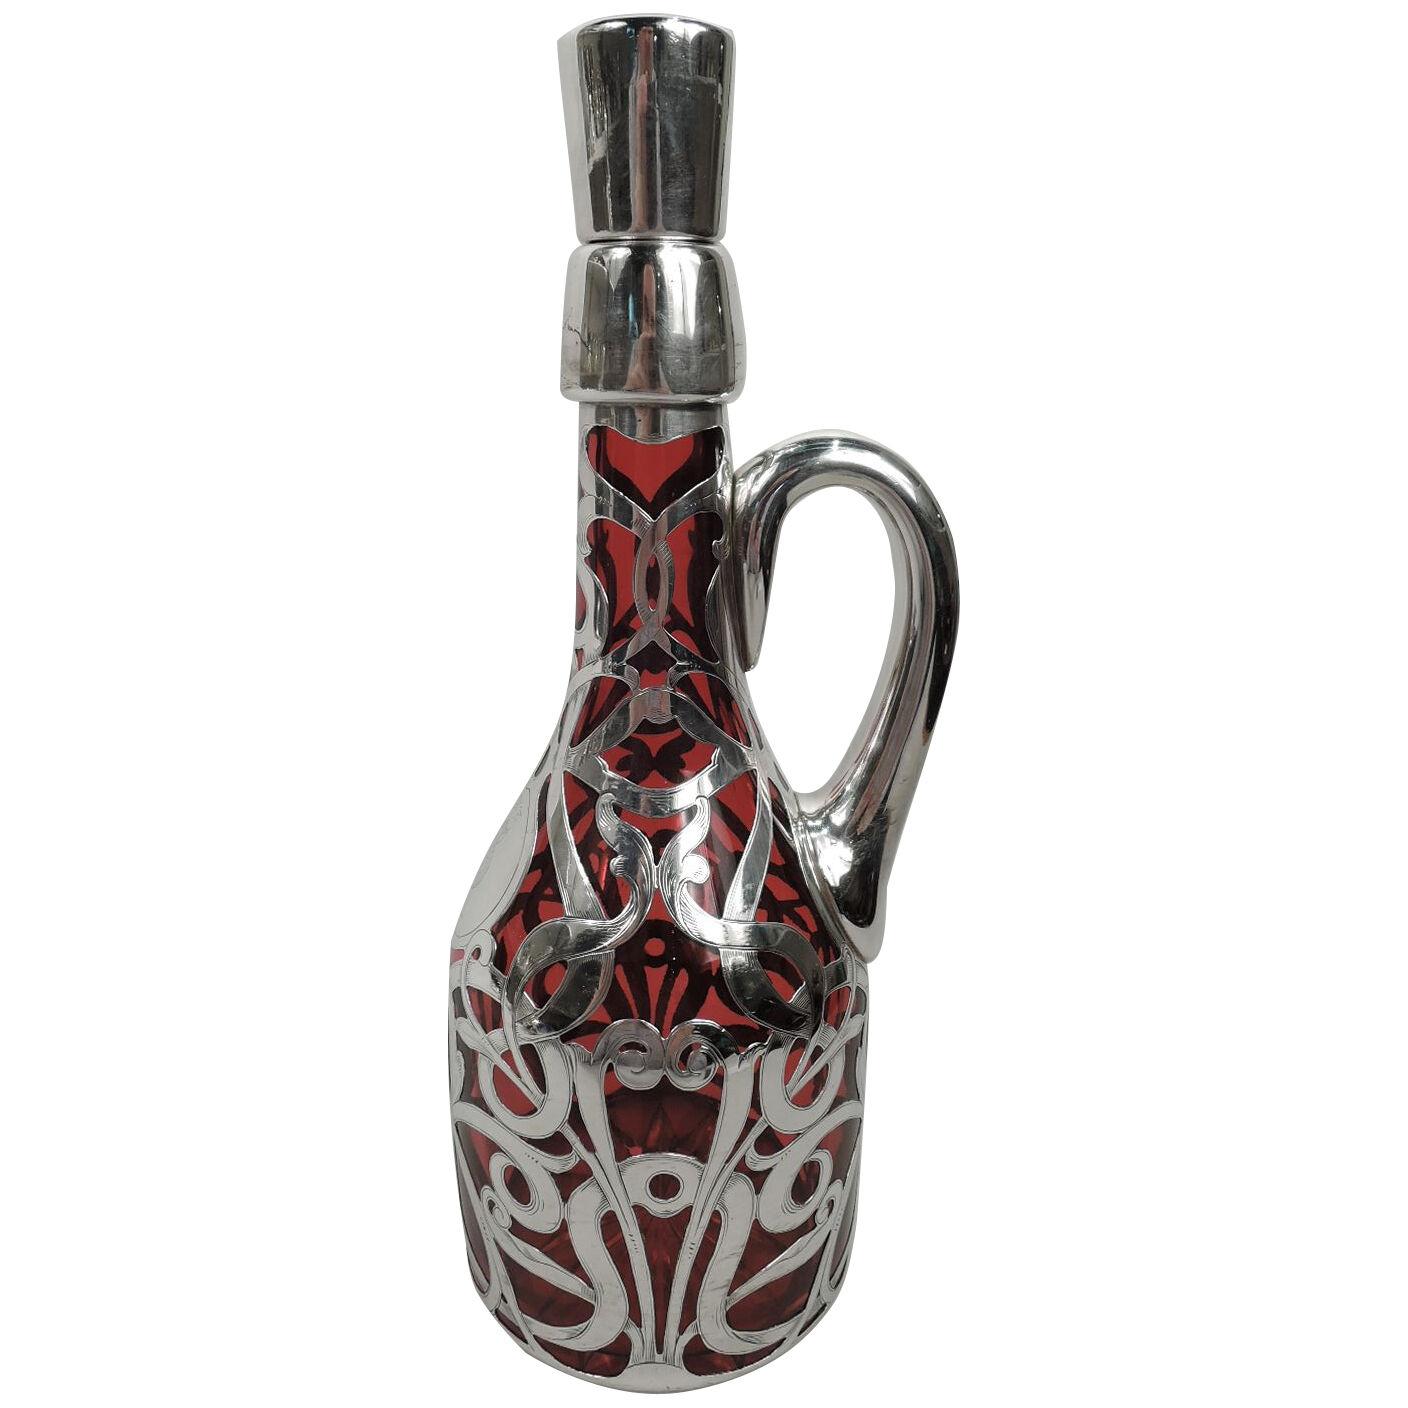 Antique Gorham Art Nouveau Red Silver Overlay Bottle Decanter